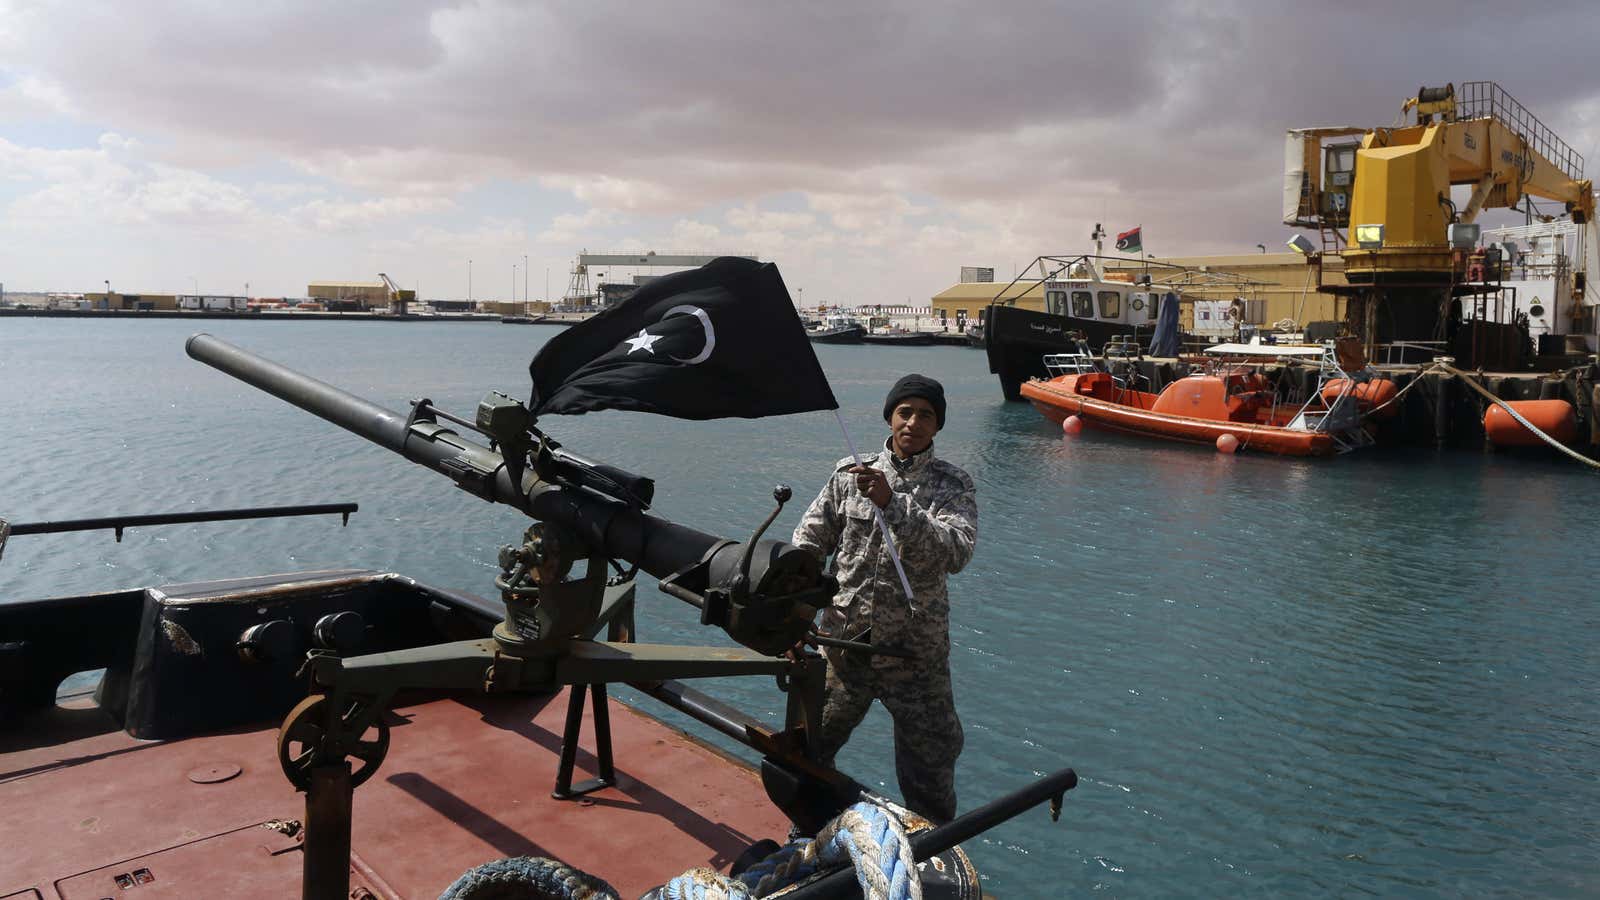 A Libyan pirate lair?